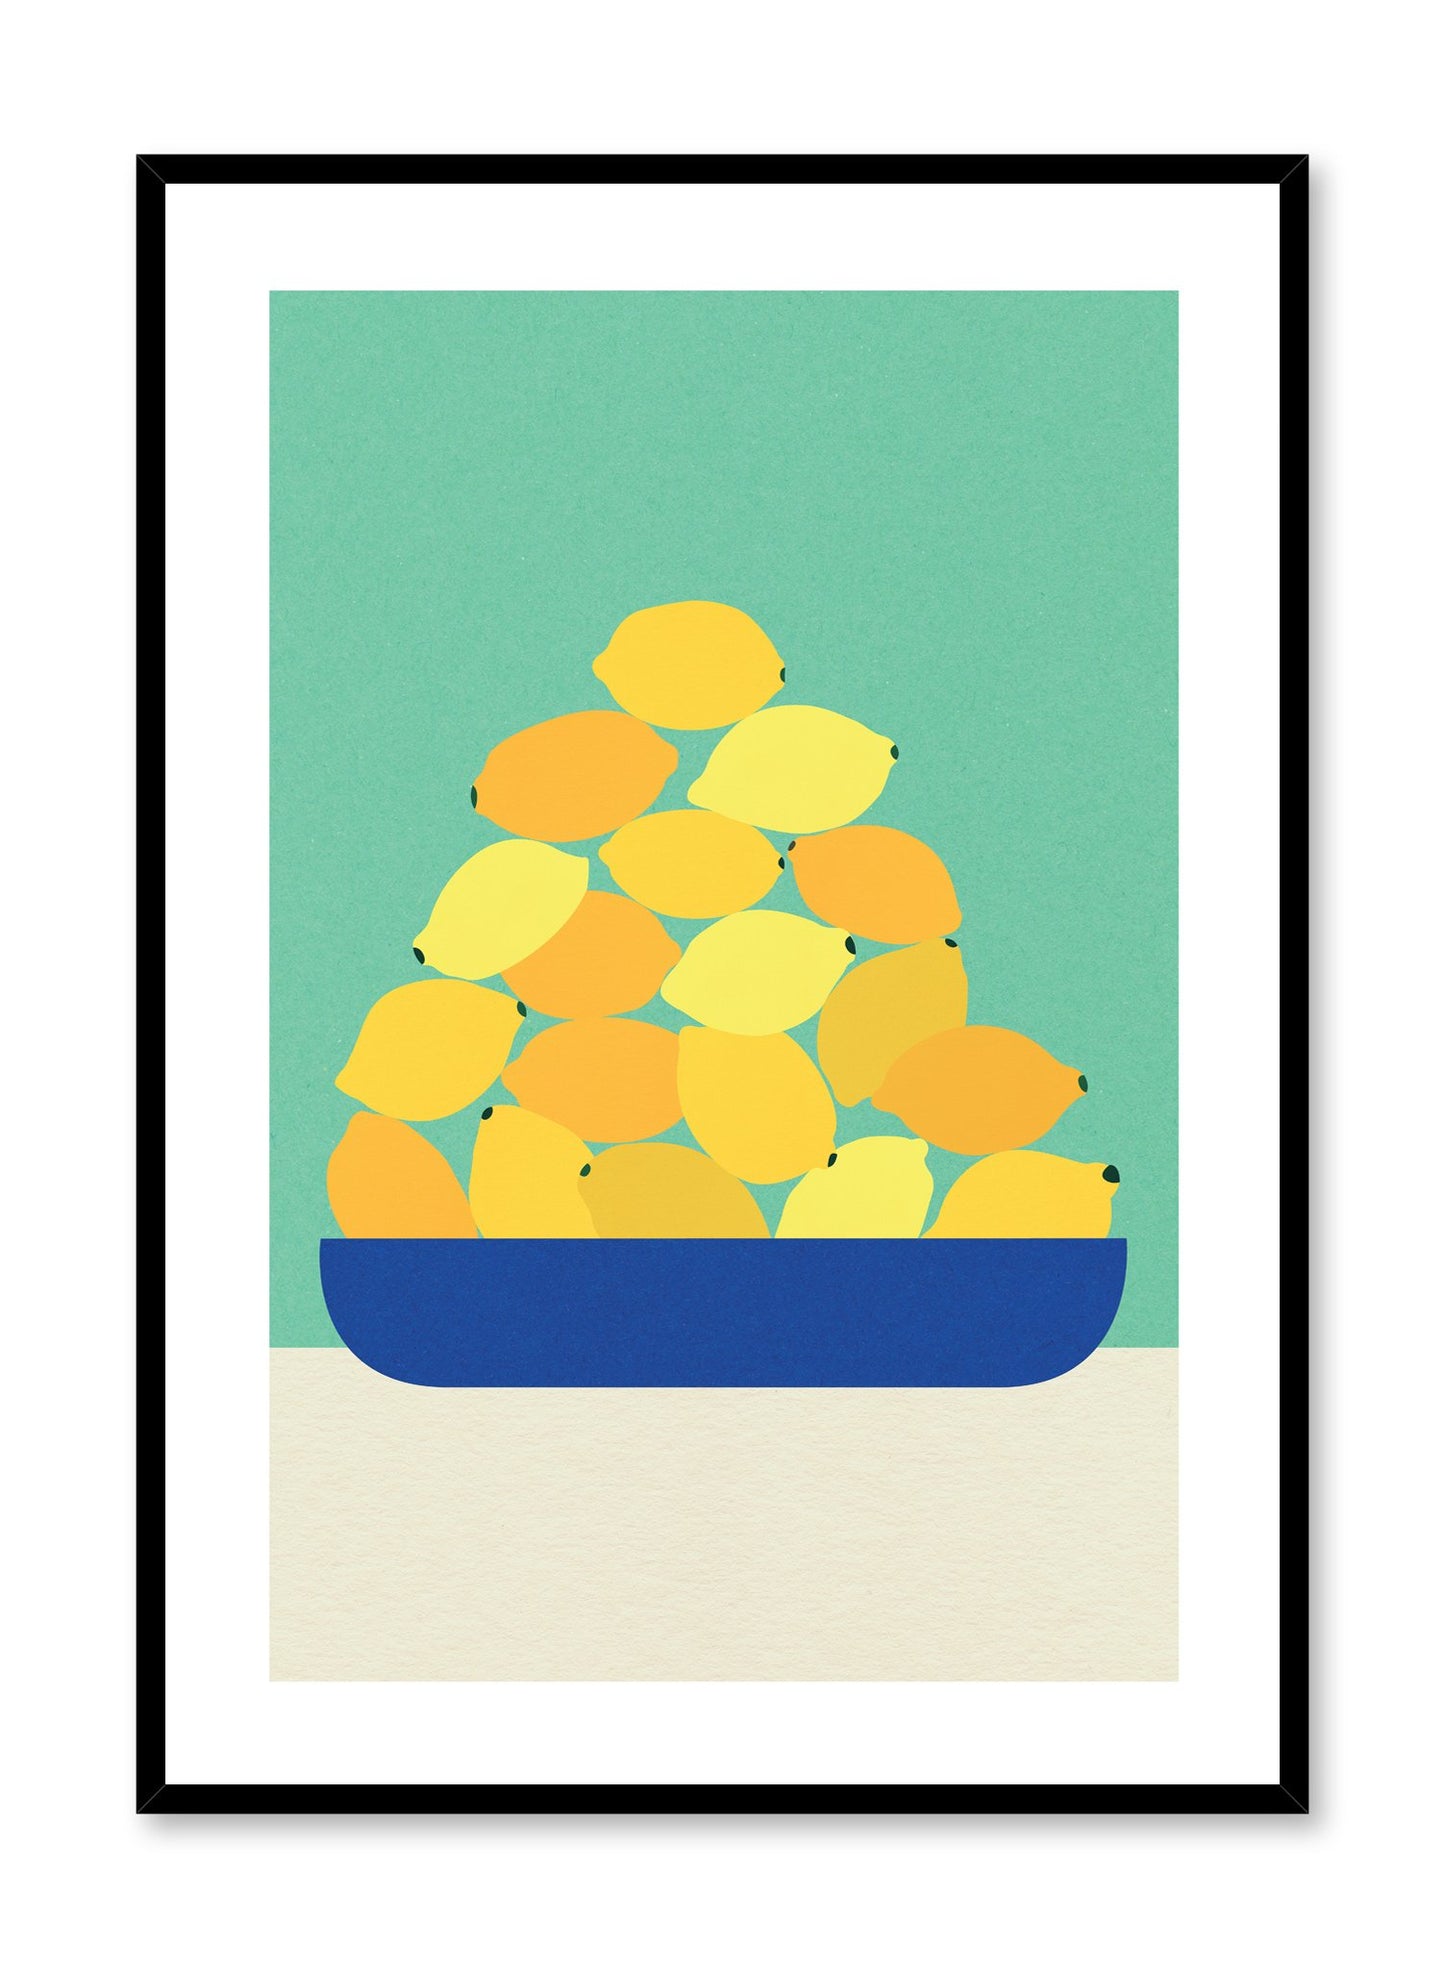 Minimalist pop art paper illustration by German artist Rosi Feist with stack of Sicily lemons